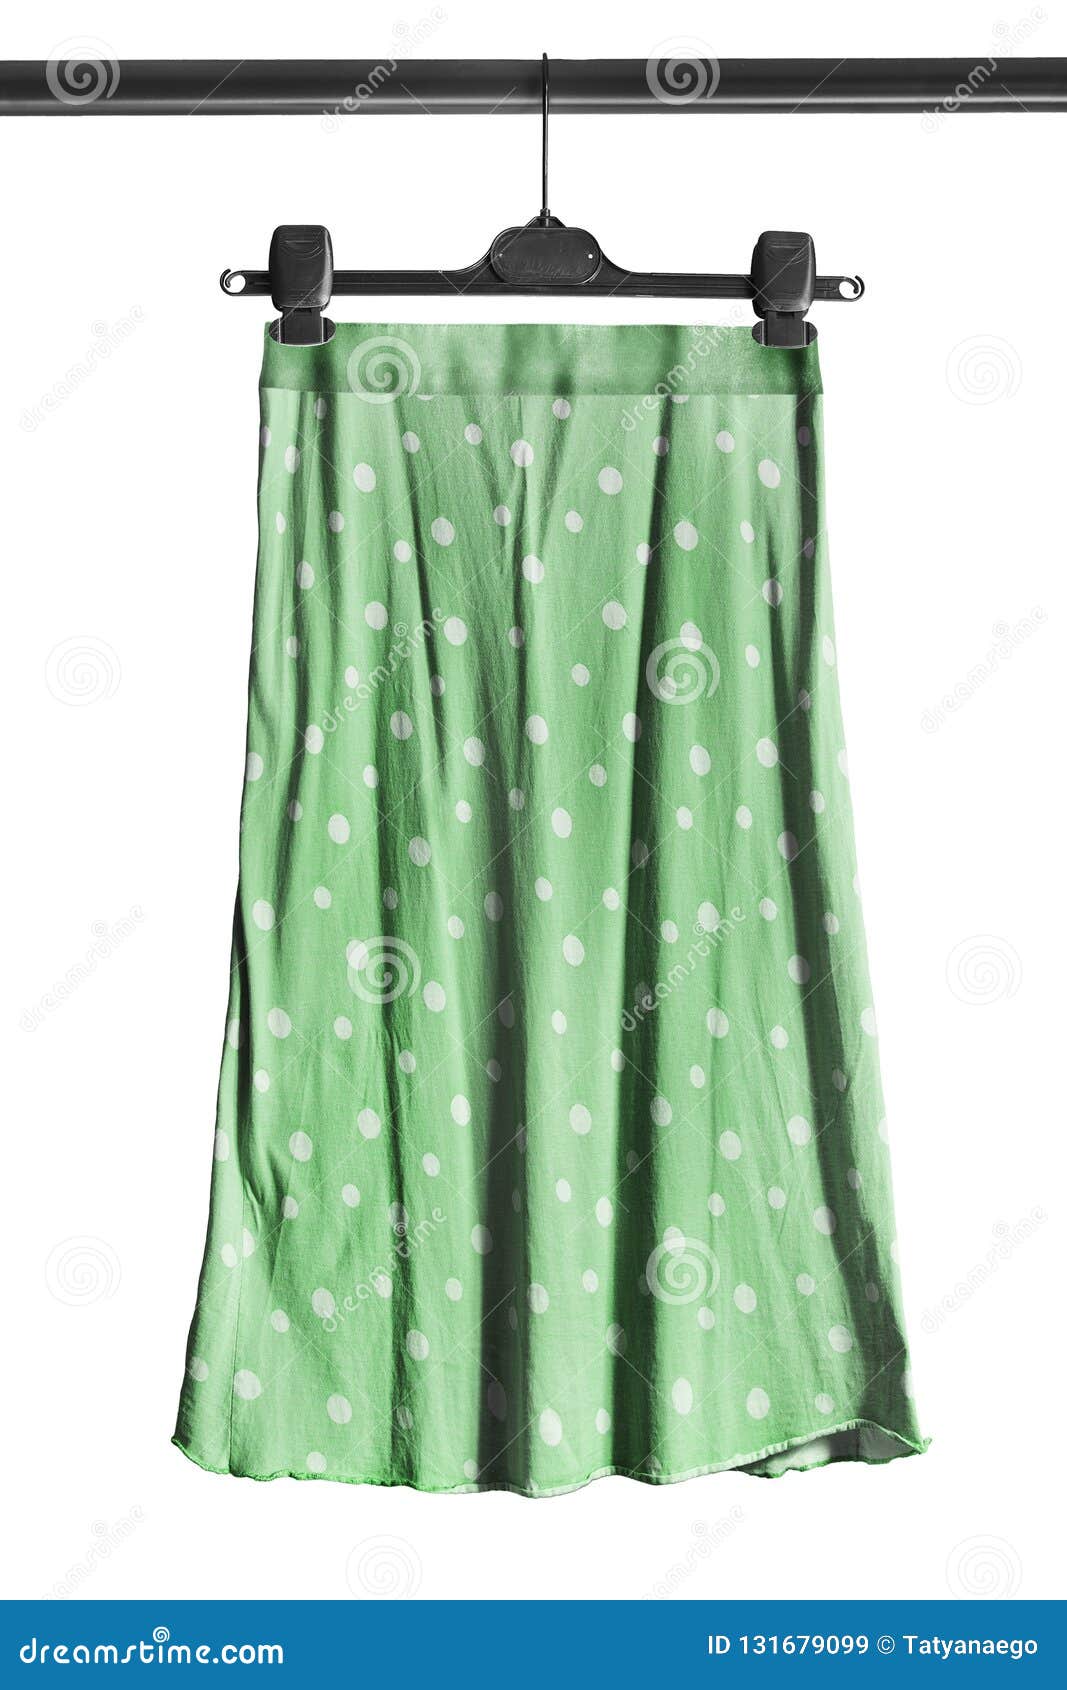 Skirt on clothes rack stock image. Image of fiber, midi - 131679099